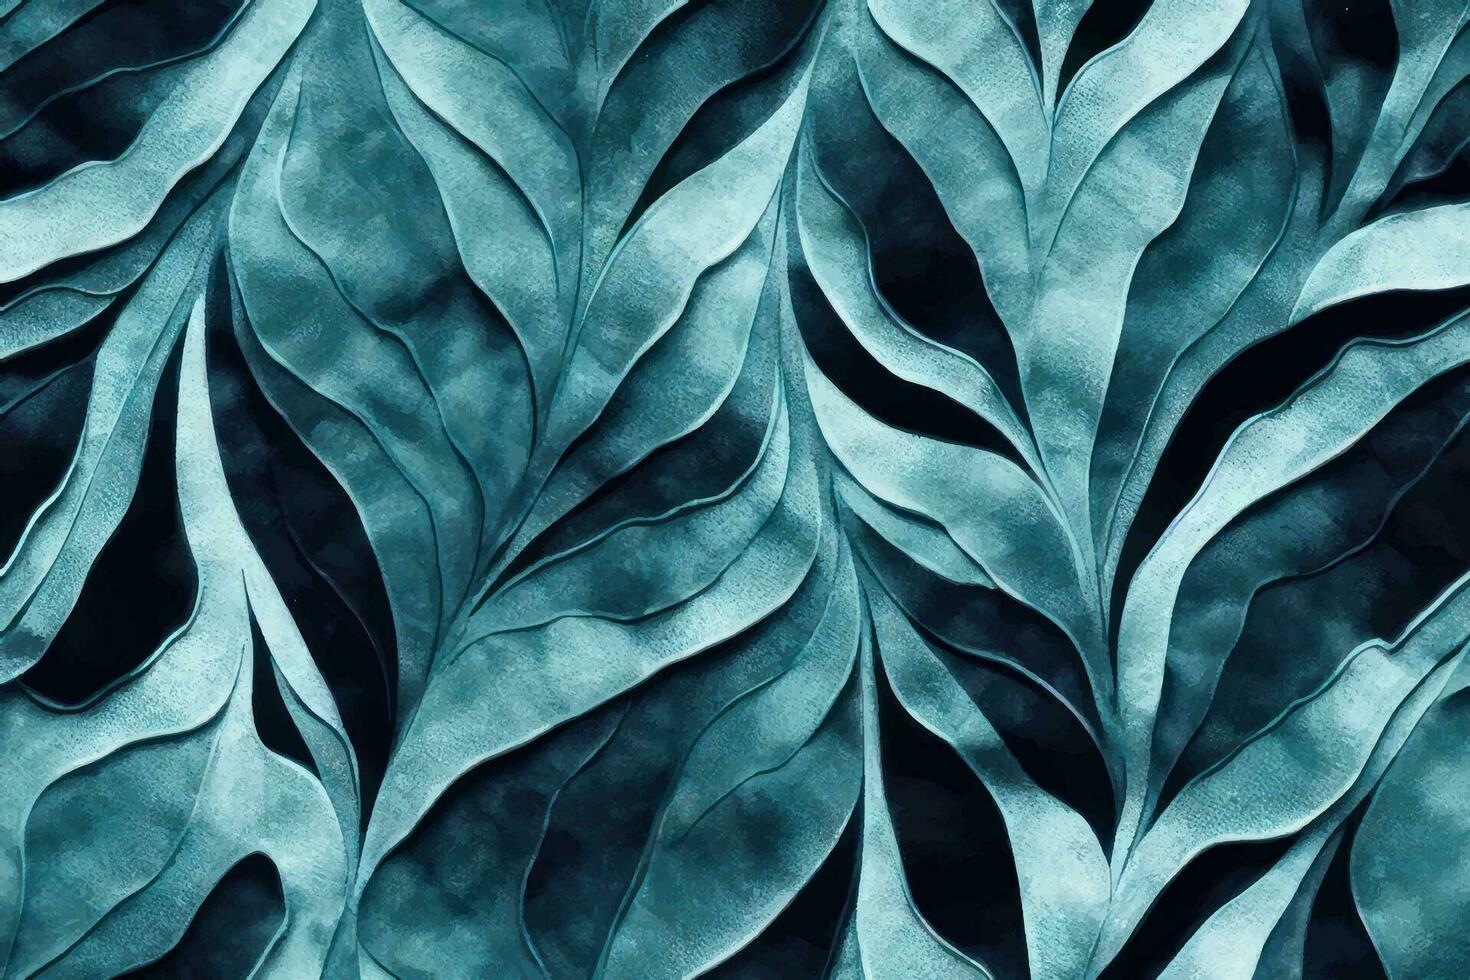 tekening naadloos modieus eindeloos illustratie streep ornamentetniciteit textiel tuin mooi sier- zomer vector eindeloos botanisch mode kleurrijk oge , taling blauw bekladden doorbladert tropisch